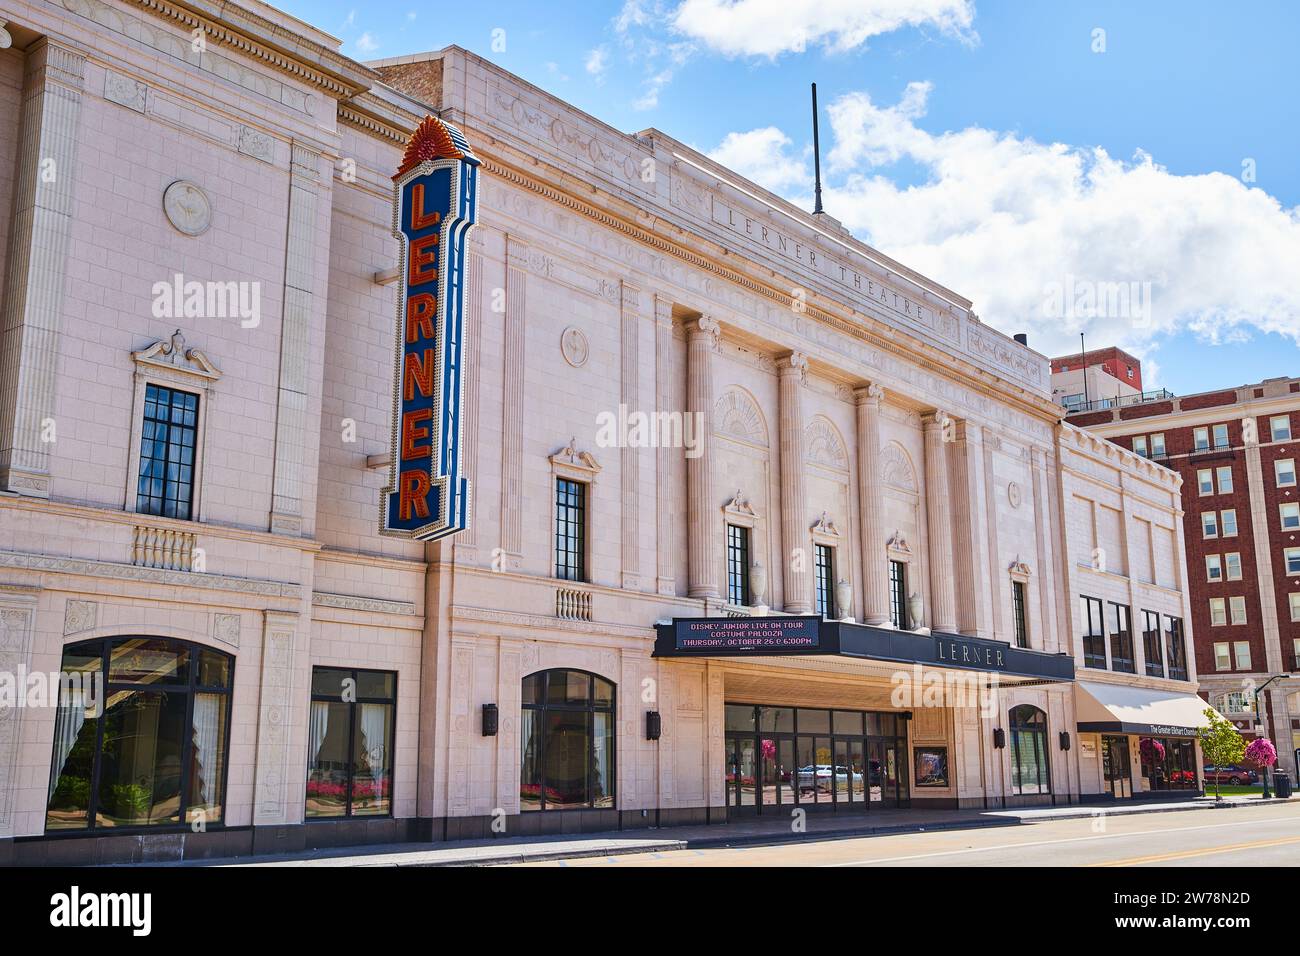 Lerner Theatre Fassade mit Neonschild, klassische Säulen - Elkhart, Indiana Stockfoto